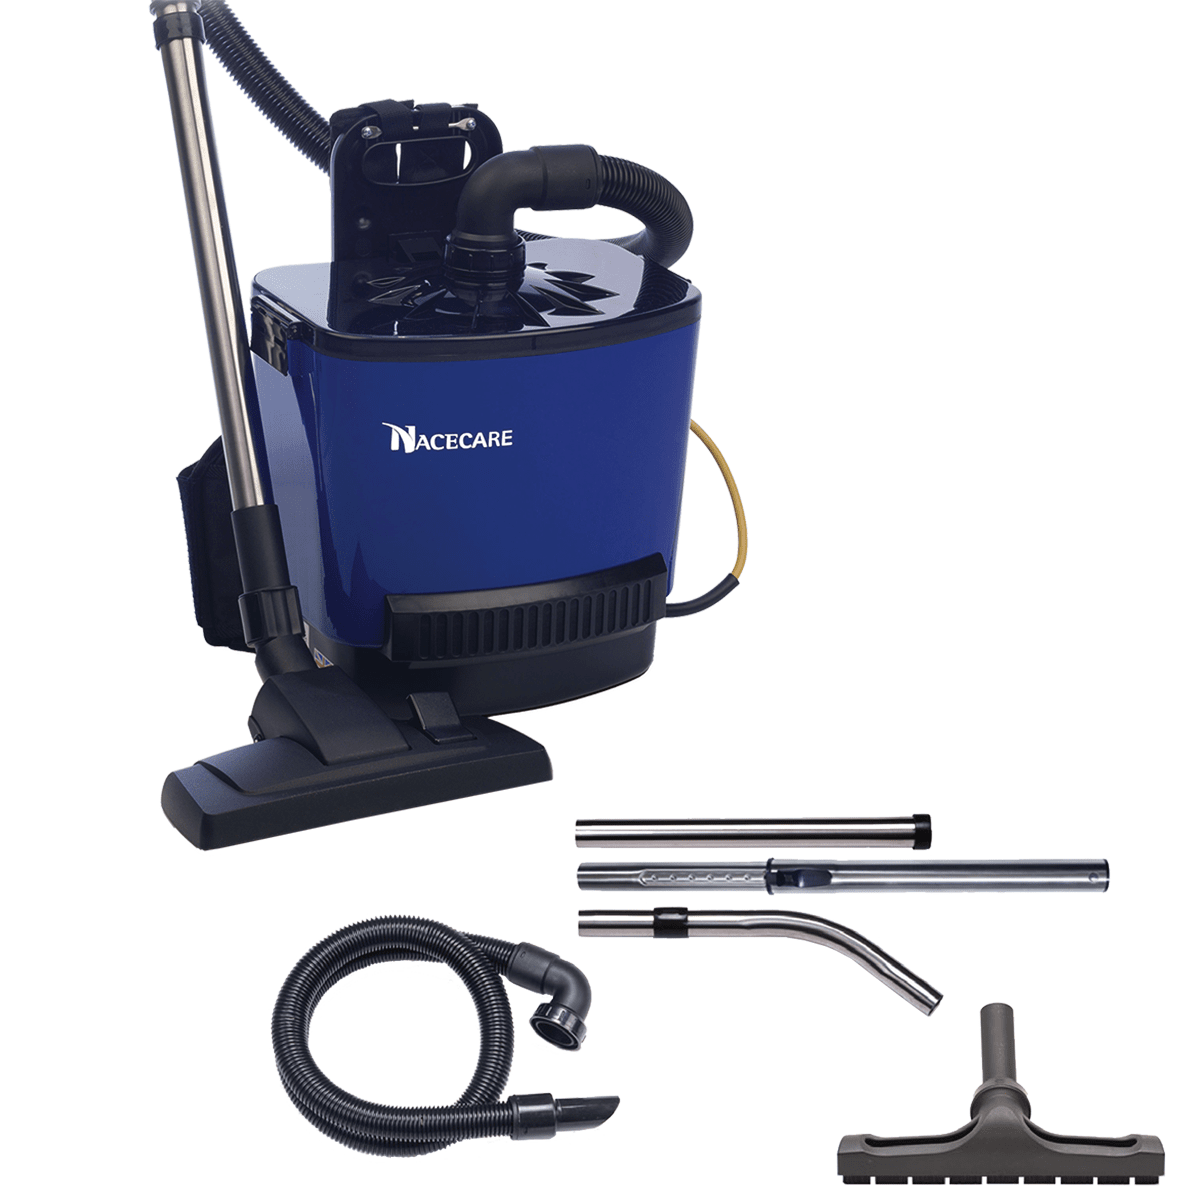 Nacecare Rsv 130 Backpack Vacuum With Grooming Kit - Astb2